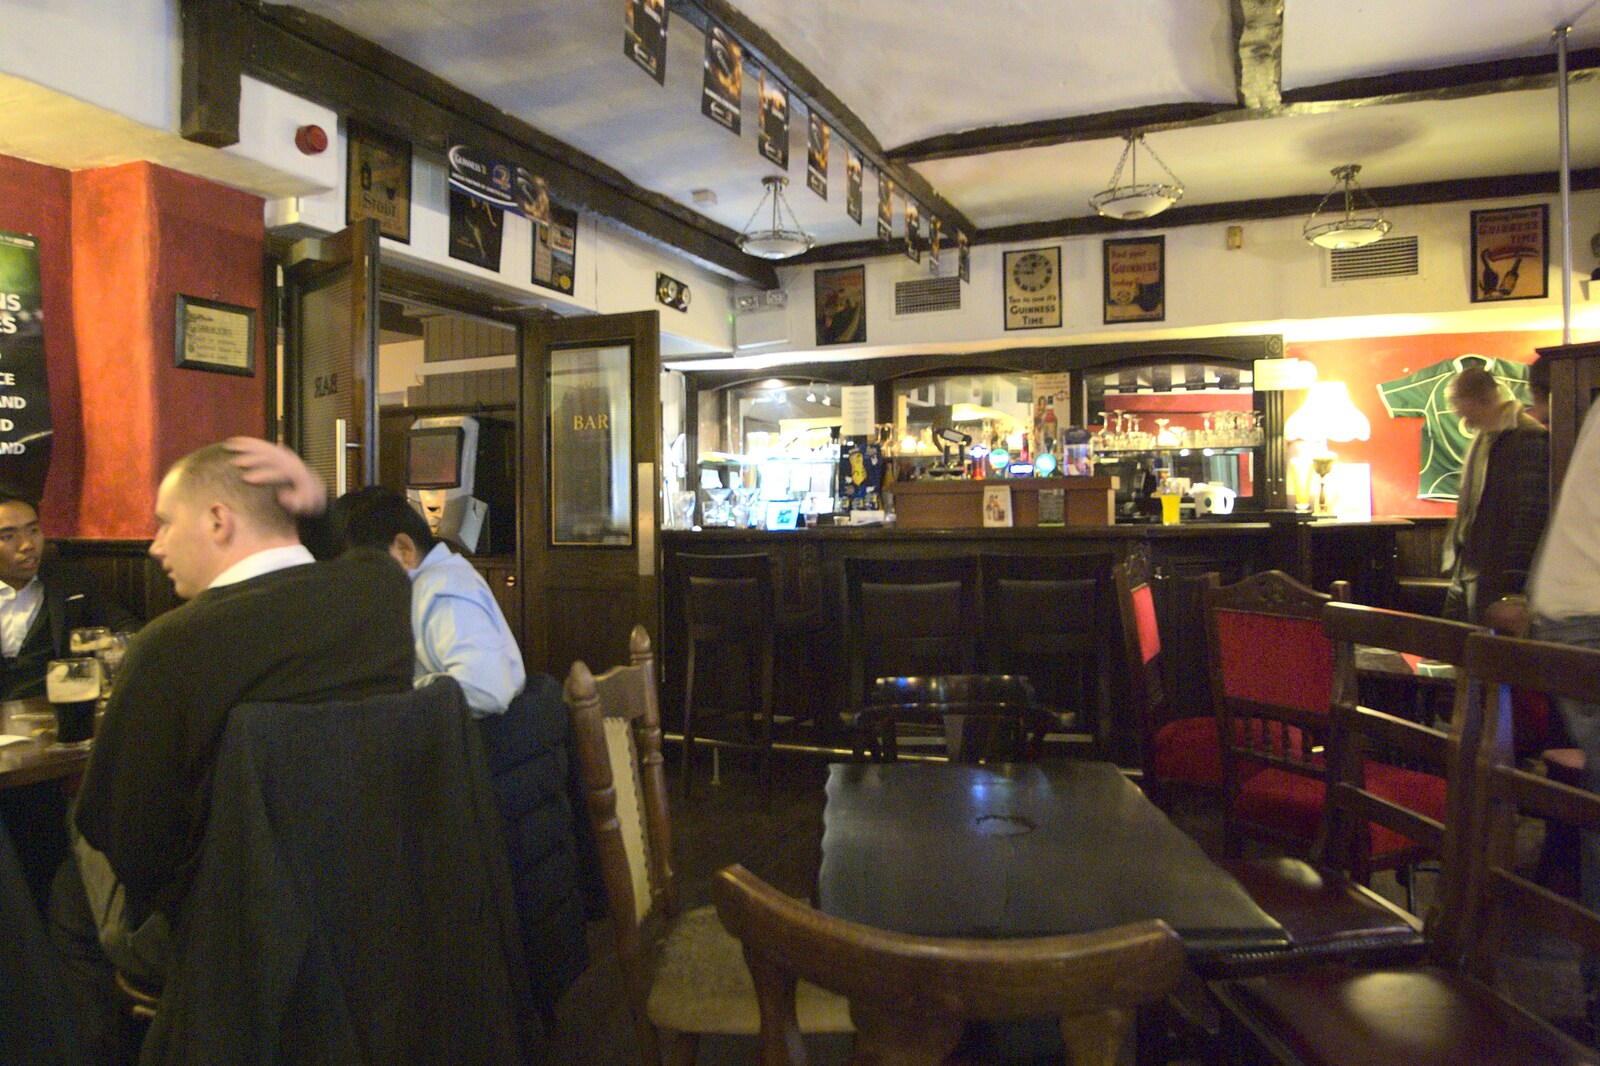 Conway's bar in Blackrock from A Week in Monkstown, County Dublin, Ireland - 1st March 2011